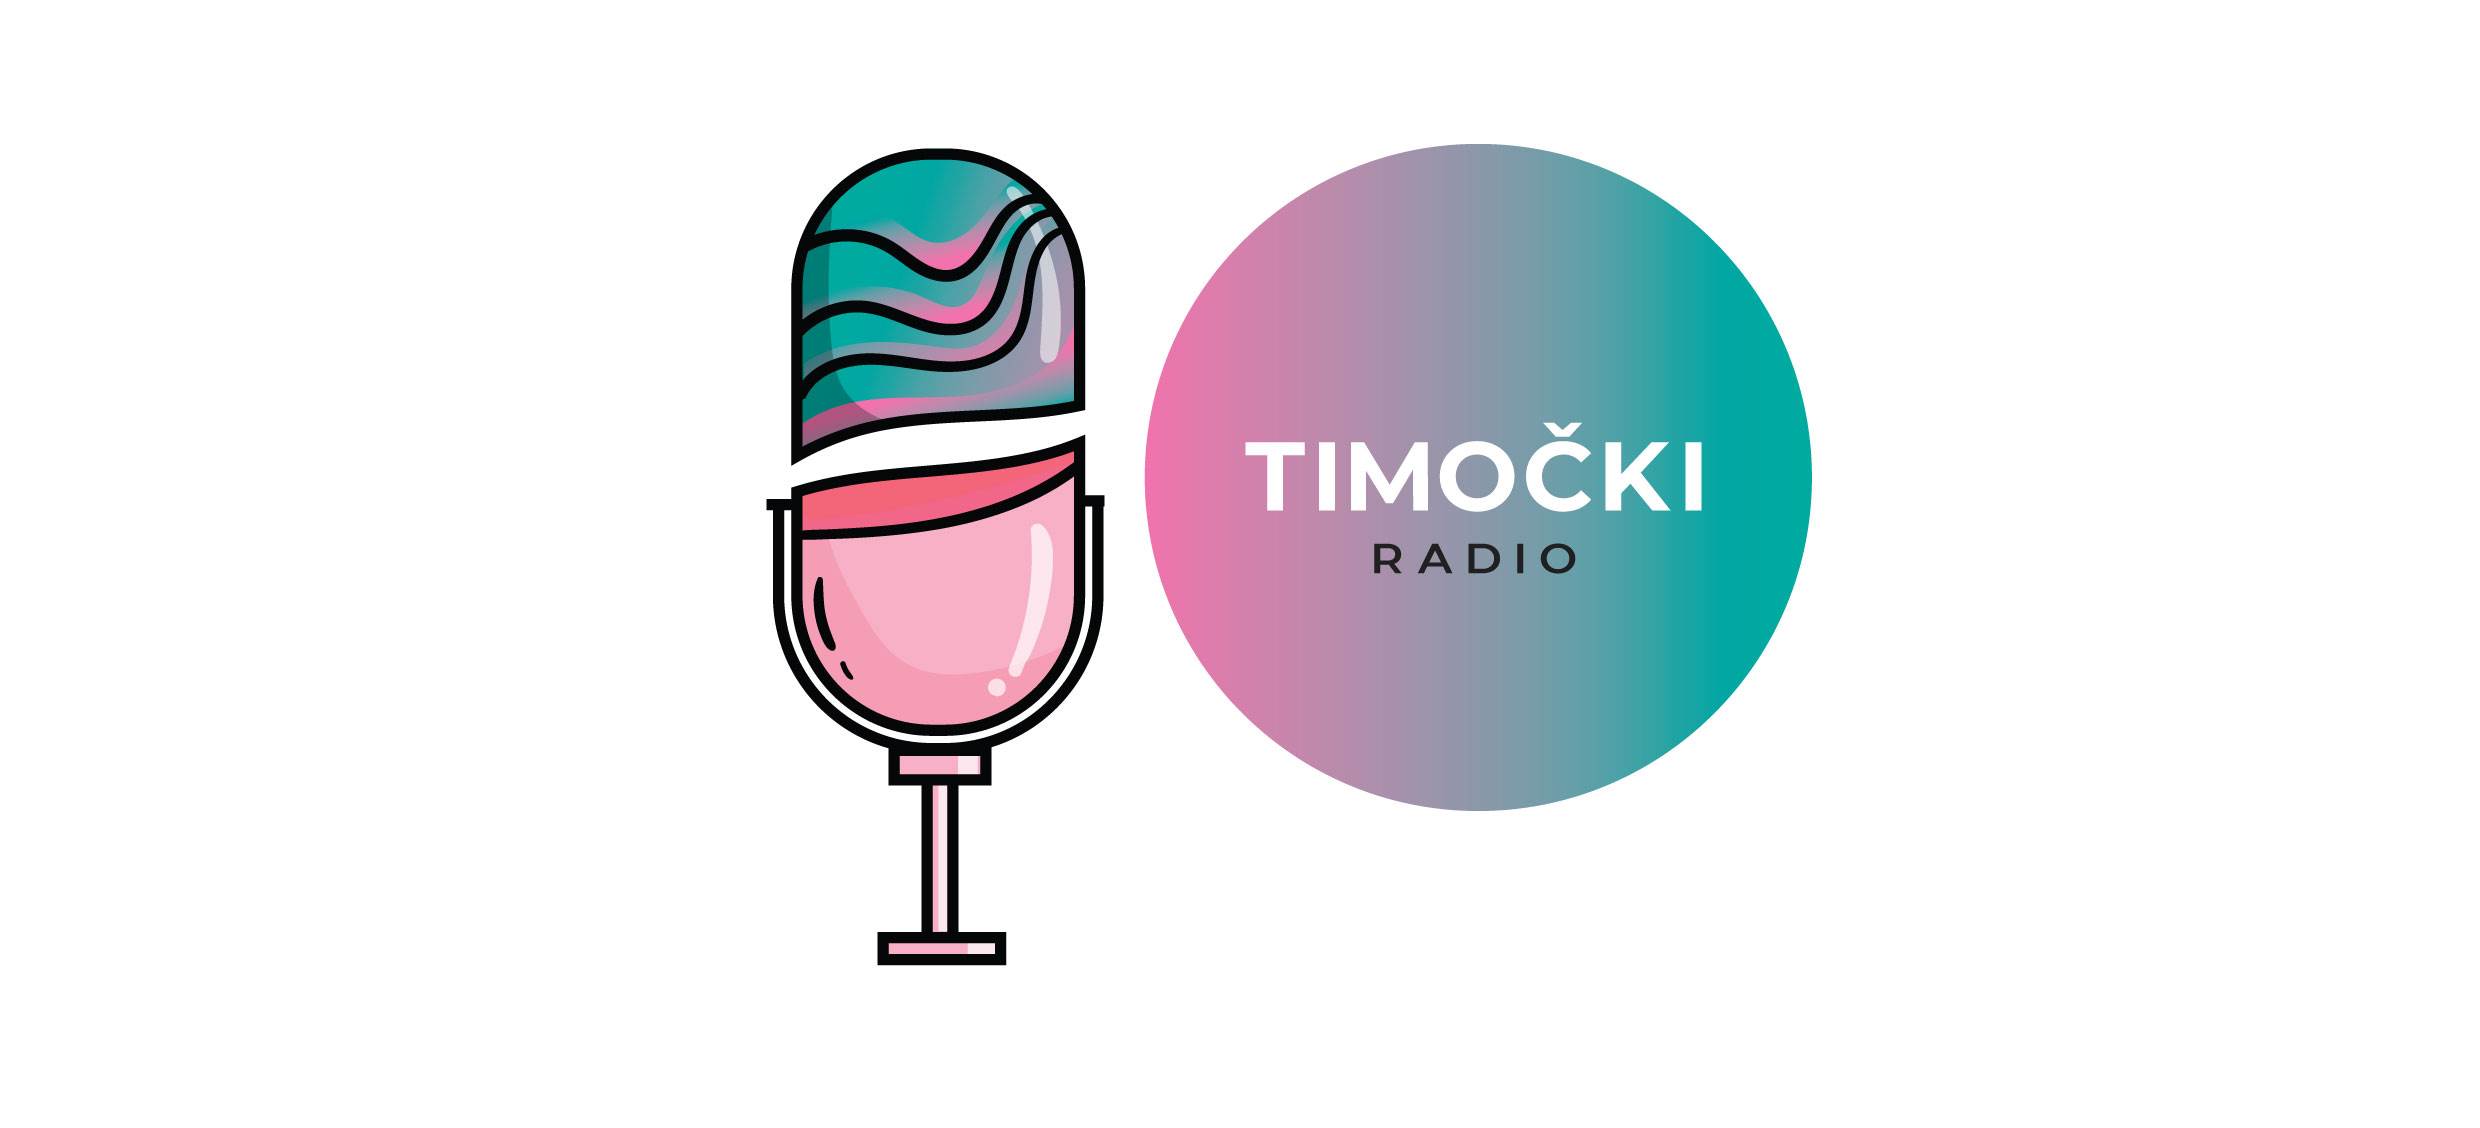 TIMOCKI-RADIO-LOGO.jpg